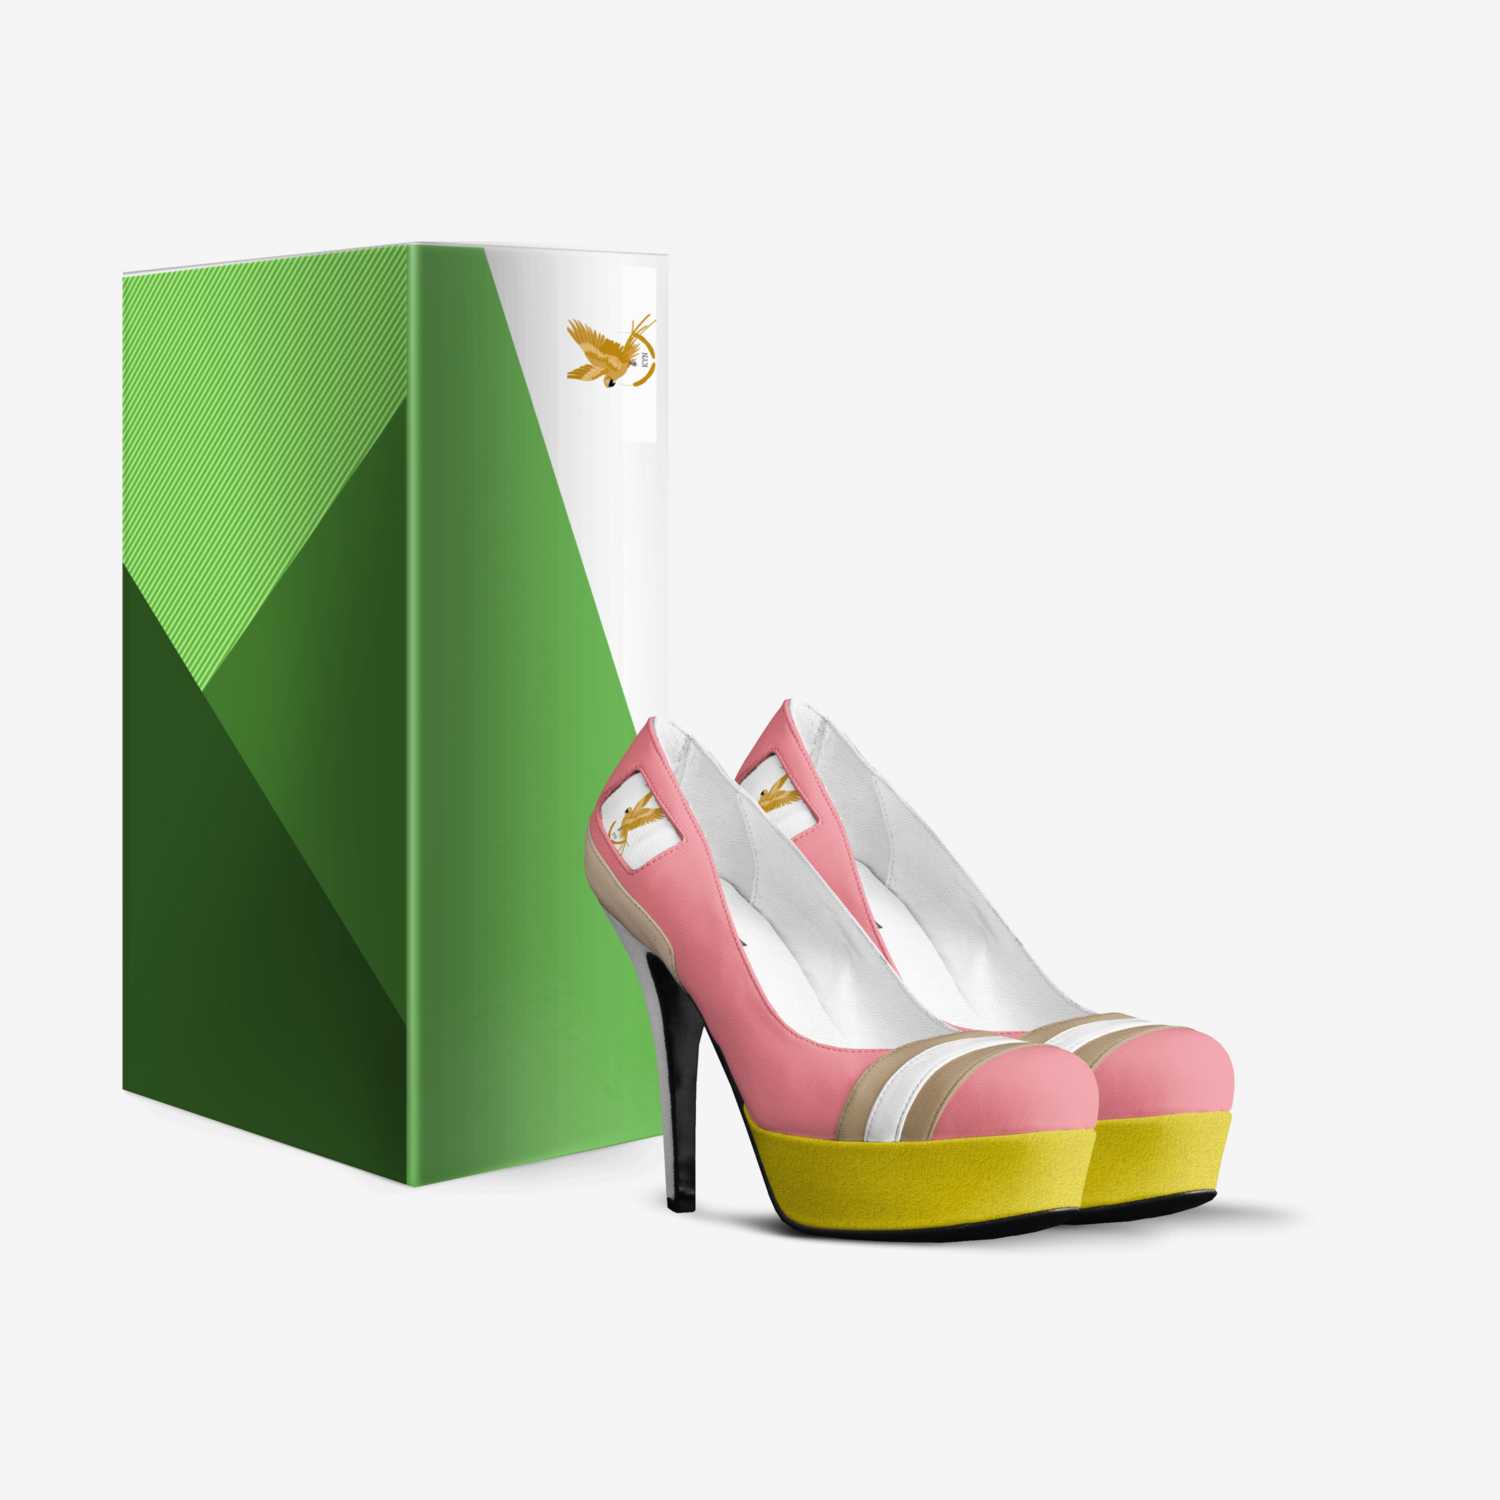 keyzhion custom made in Italy shoes by Nekisha Robinson | Box view